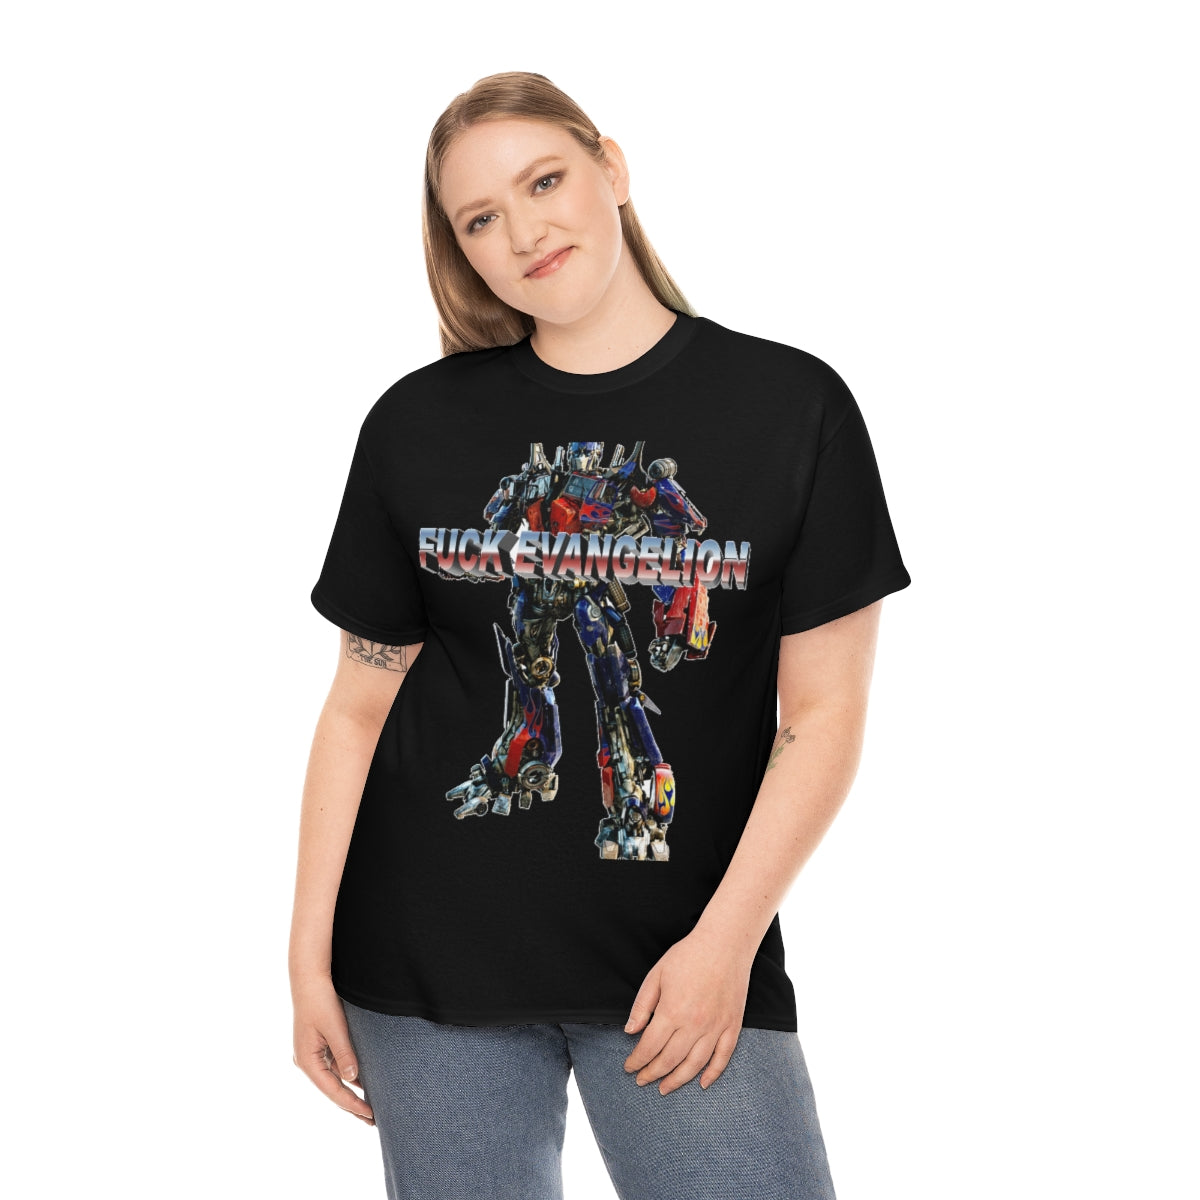 Fuck Evangelion Shirt